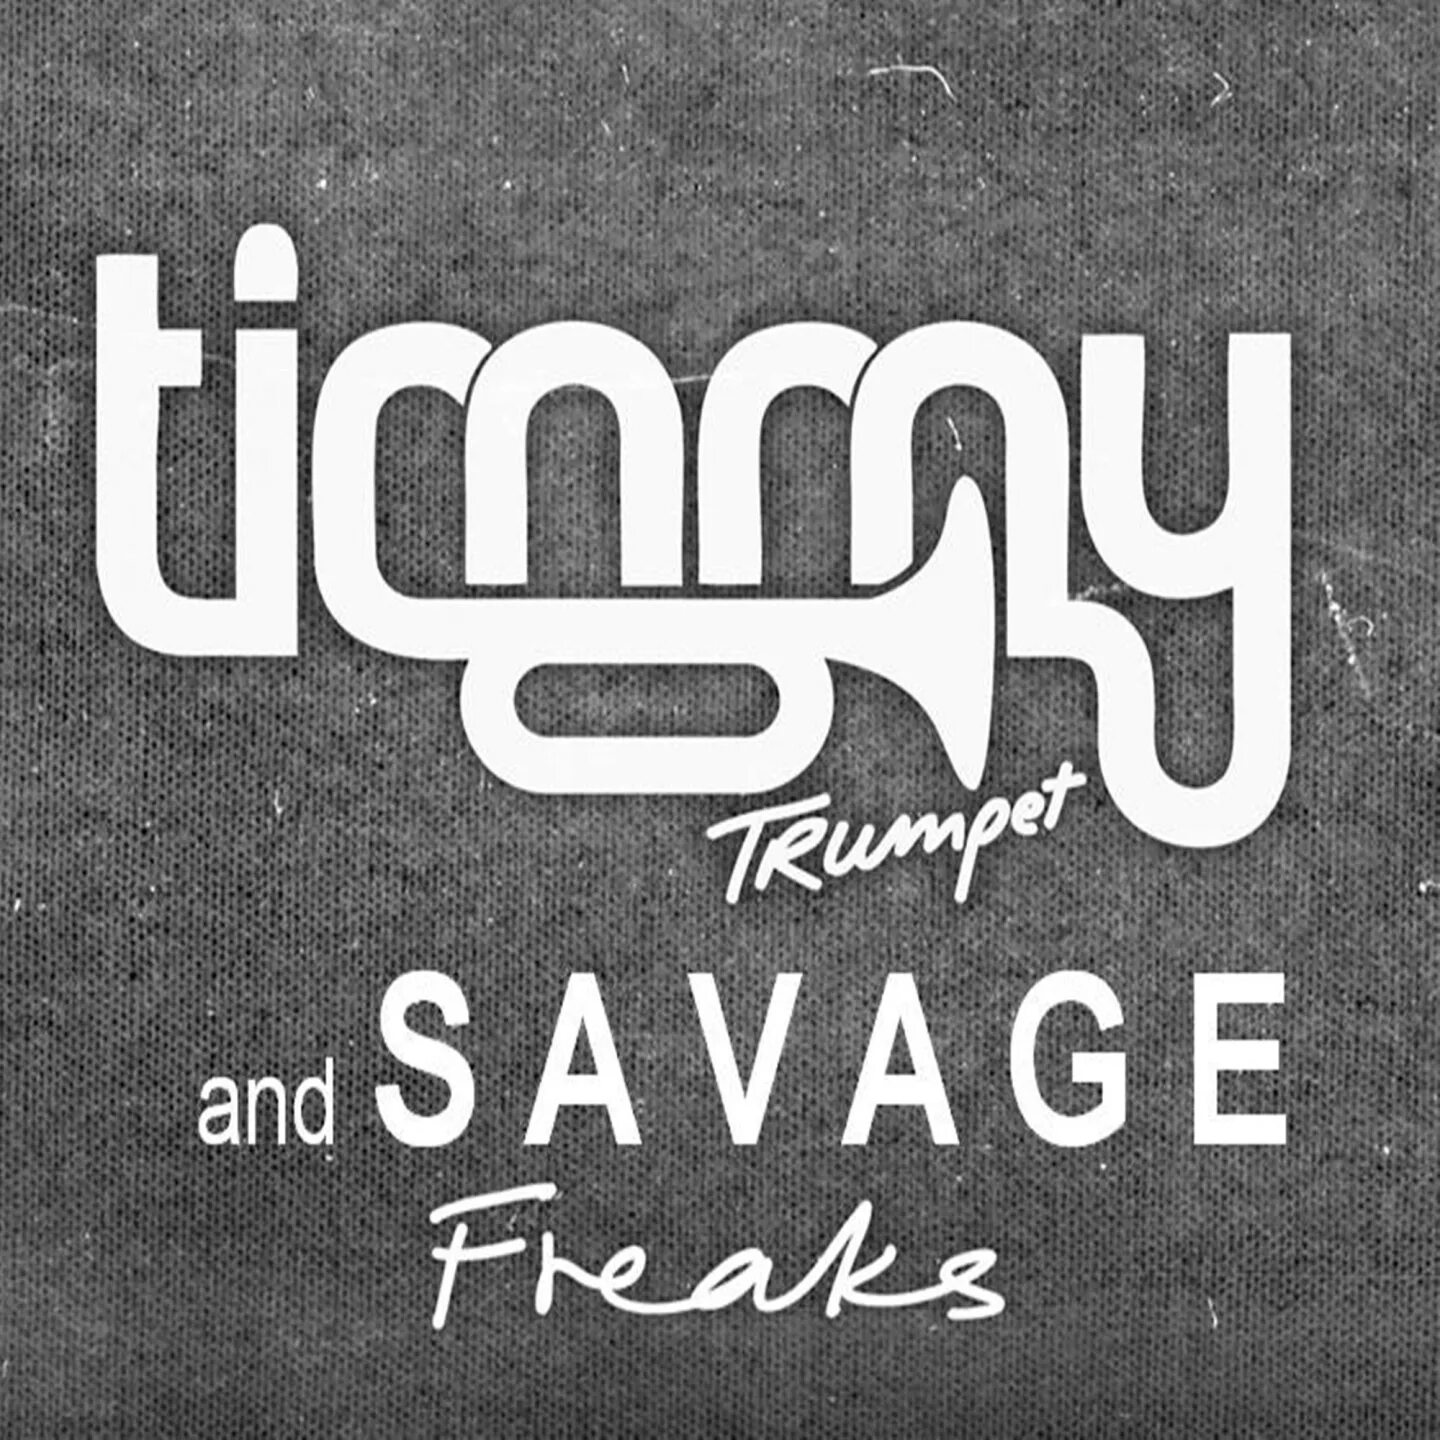 Тимми трампет Саведж. Timmy Trumpet Savage Freaks. Freaks обложка. Freaks обложка альбома.